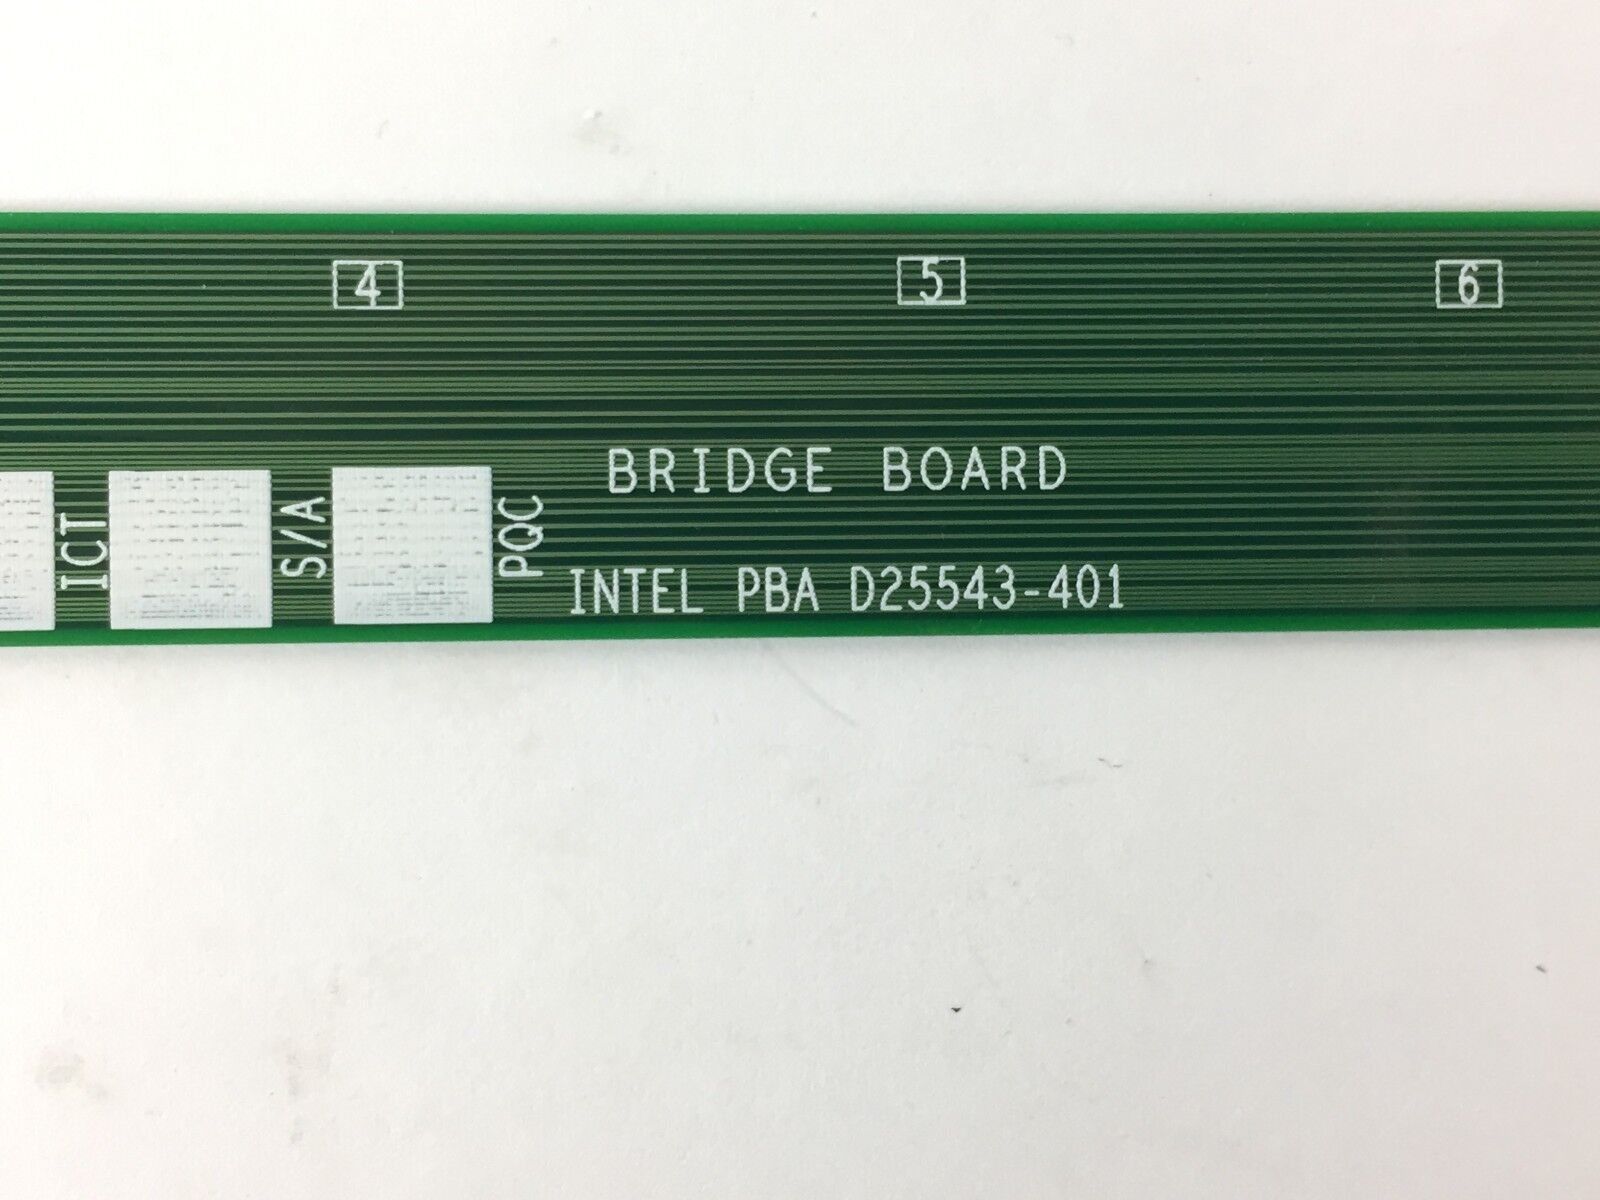 Intel Bridge Board PBA D25543-401